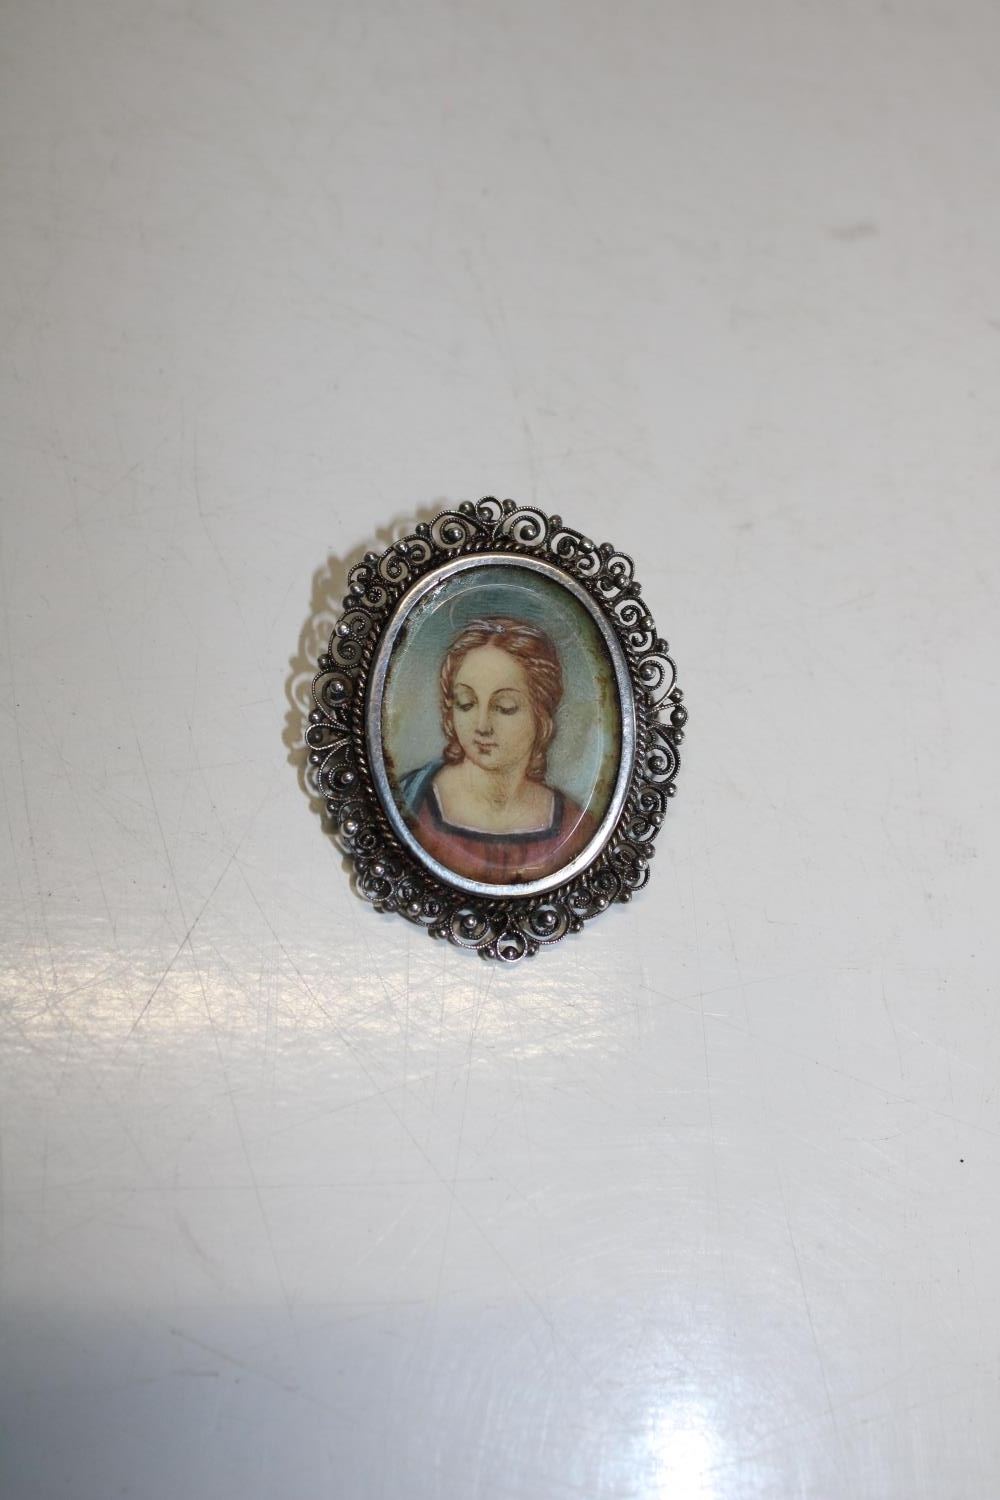 A vintage silver portrait brooch